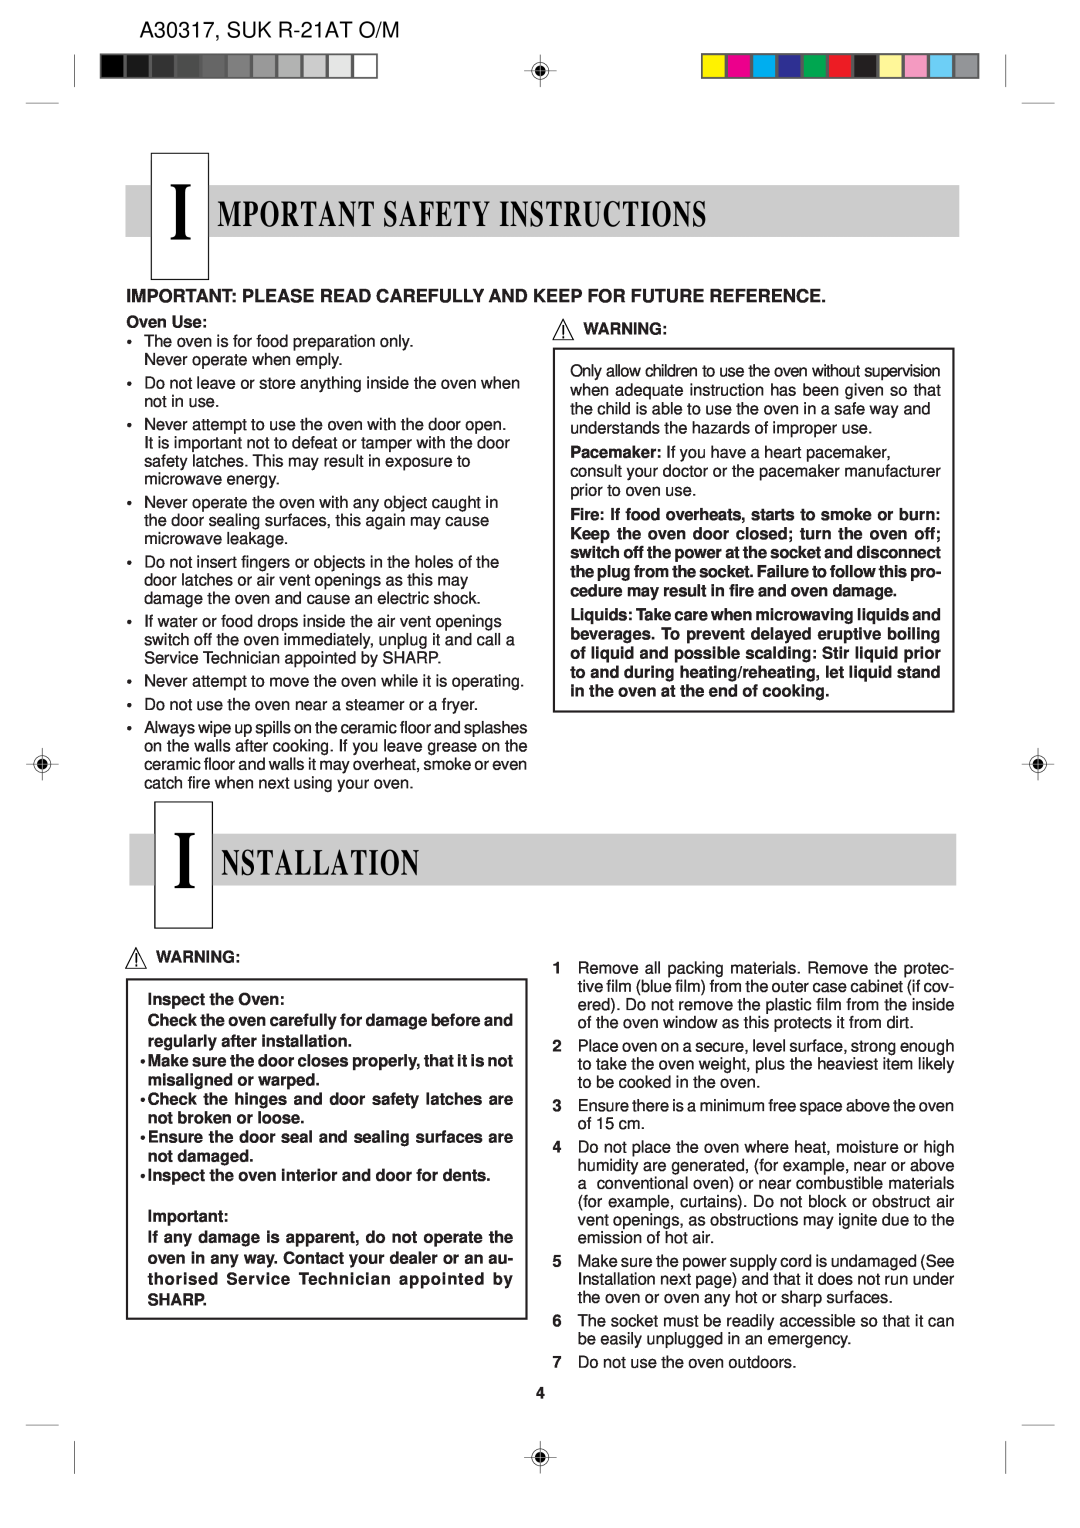 Sharp operation manual Mportant Safety Instructions, I Nstallation, A30317, SUK R-21AT O/M 